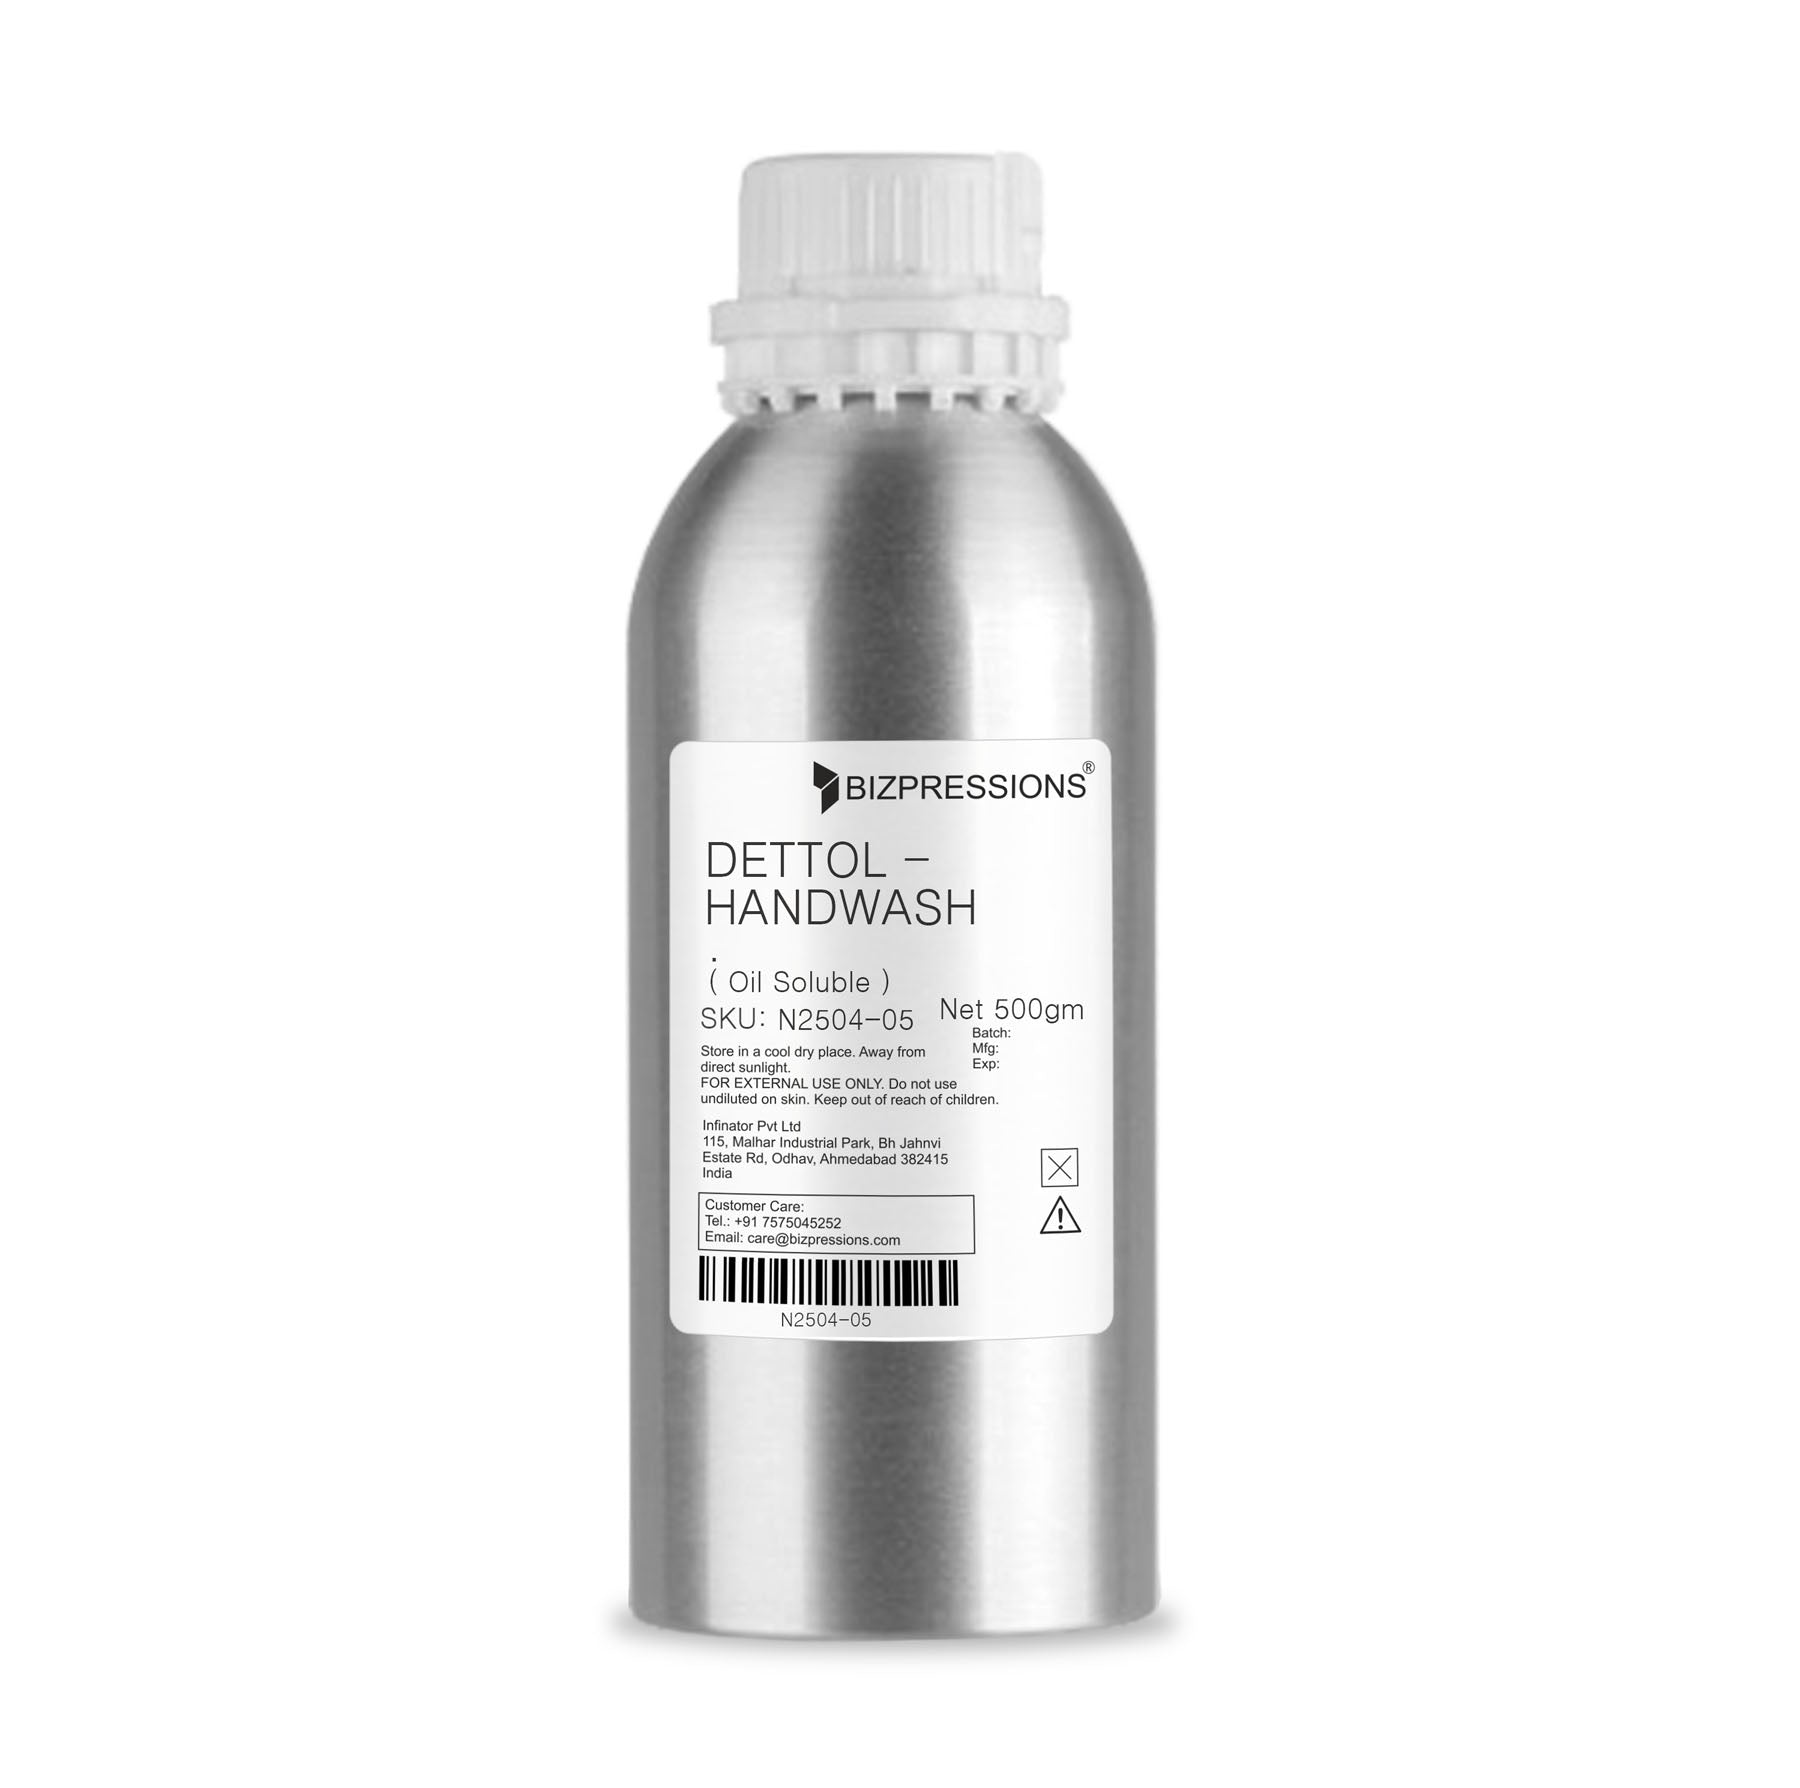 DETTOL - HANDWASH - Fragrance ( Oil Soluble ) - 500 gm